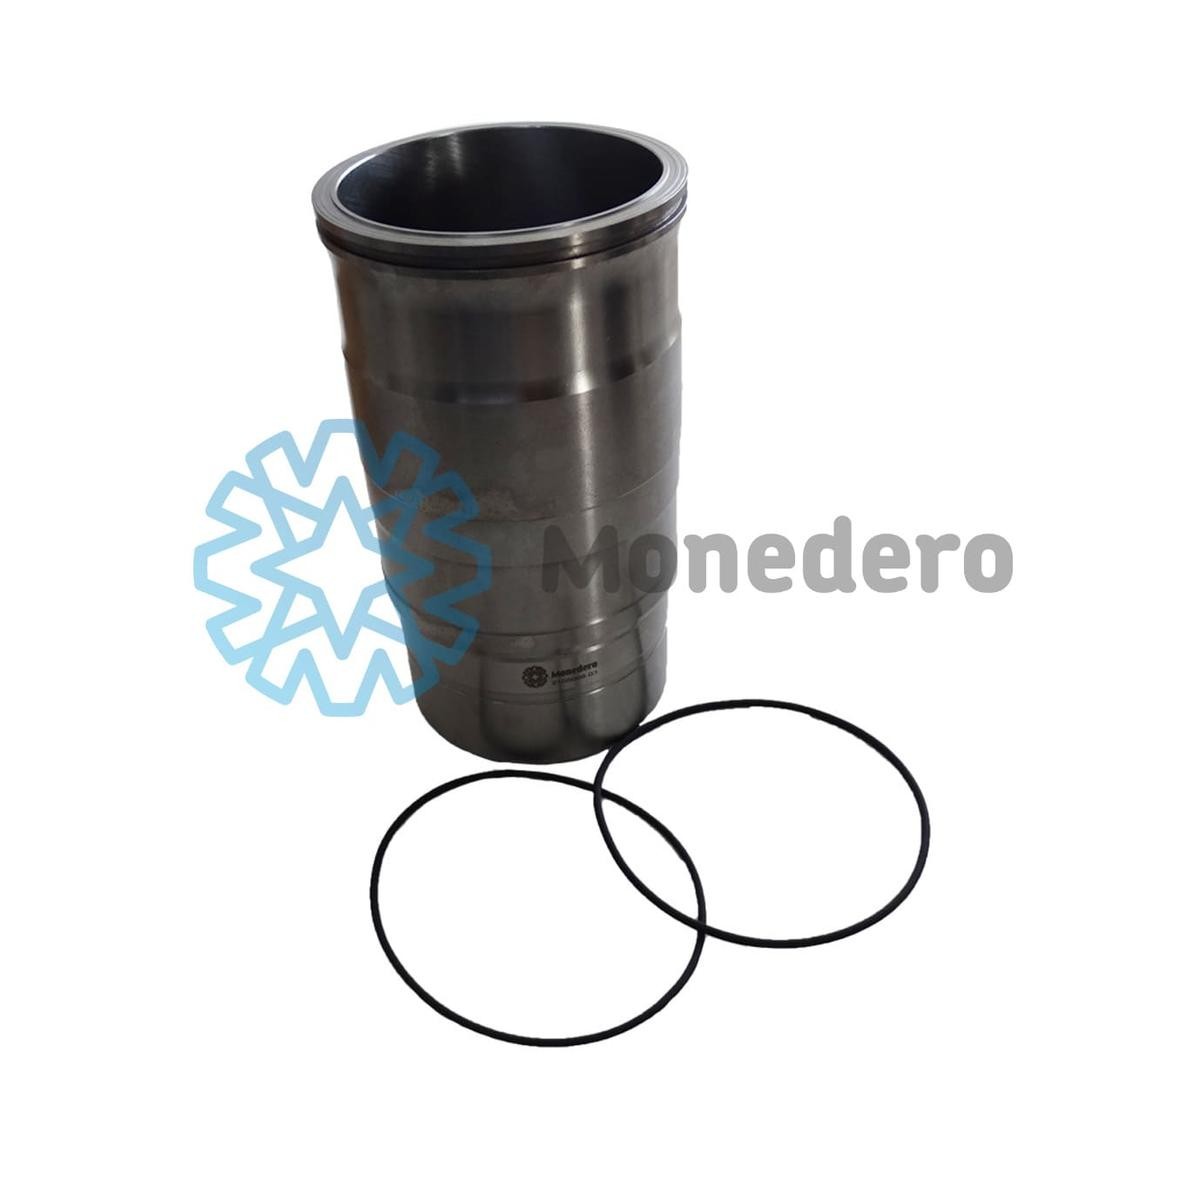 MONEDERO 40011300004 Cylinder Sleeve 2183352